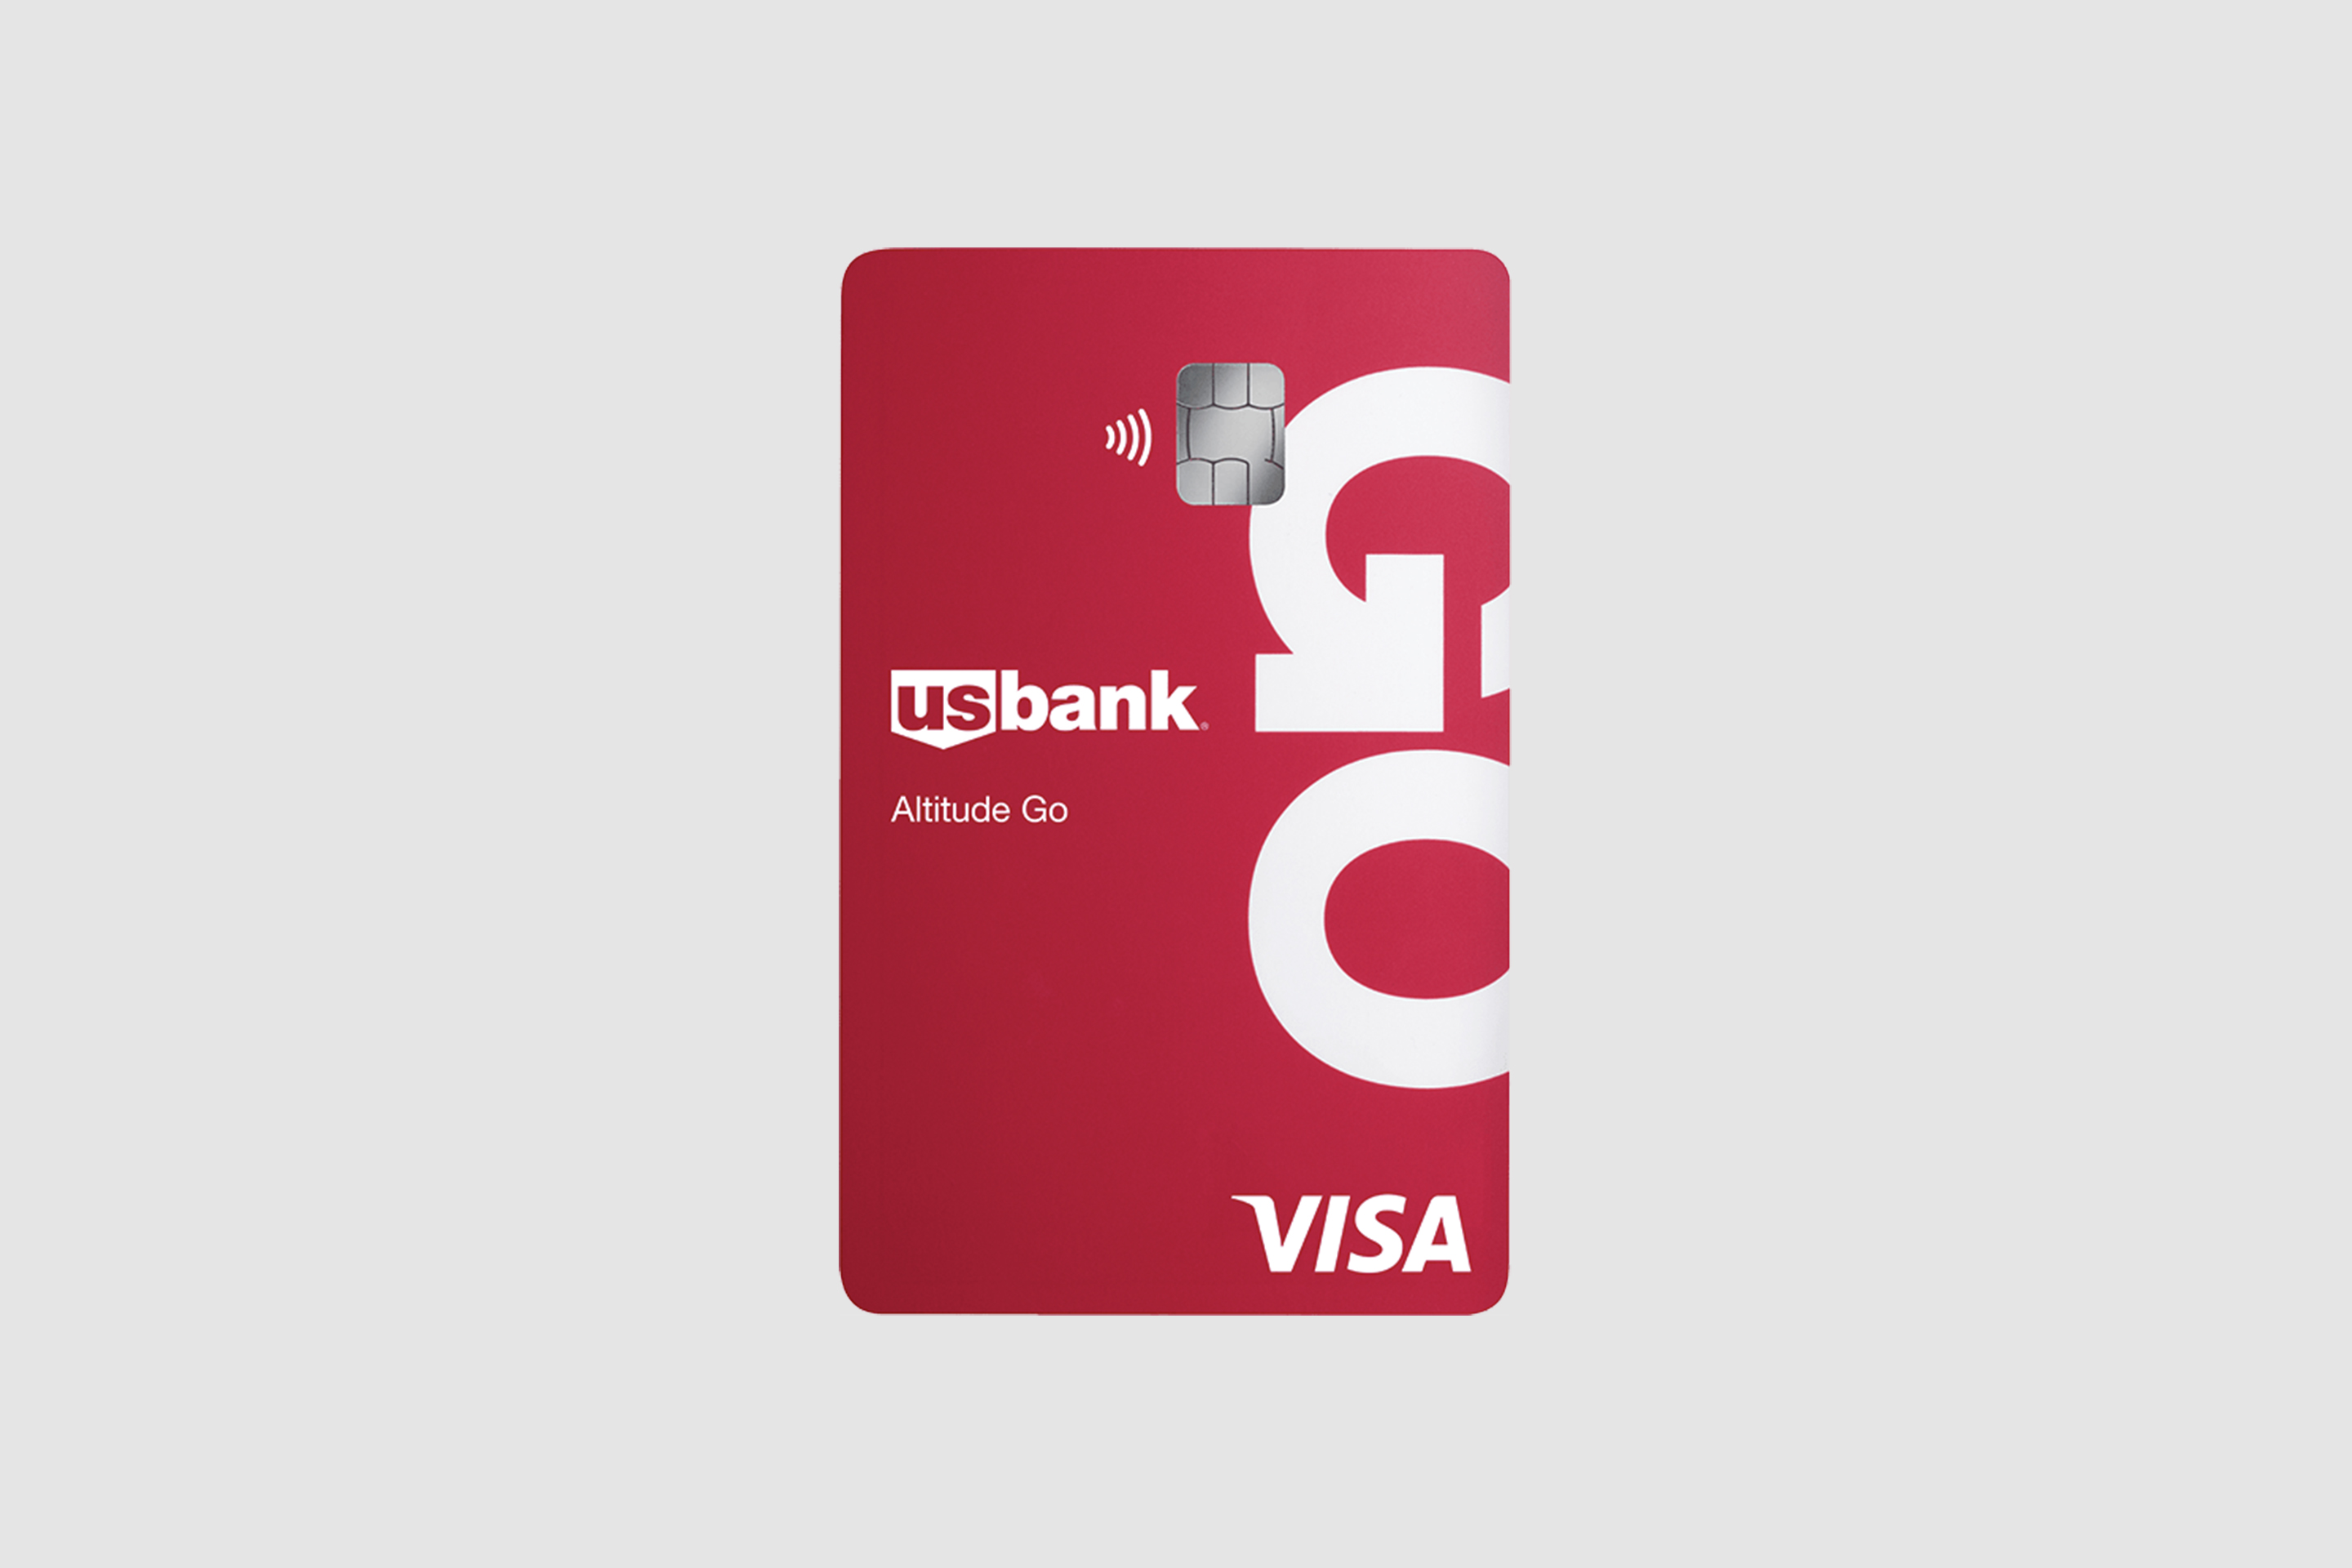 US Bank Altitude Go Credit Card